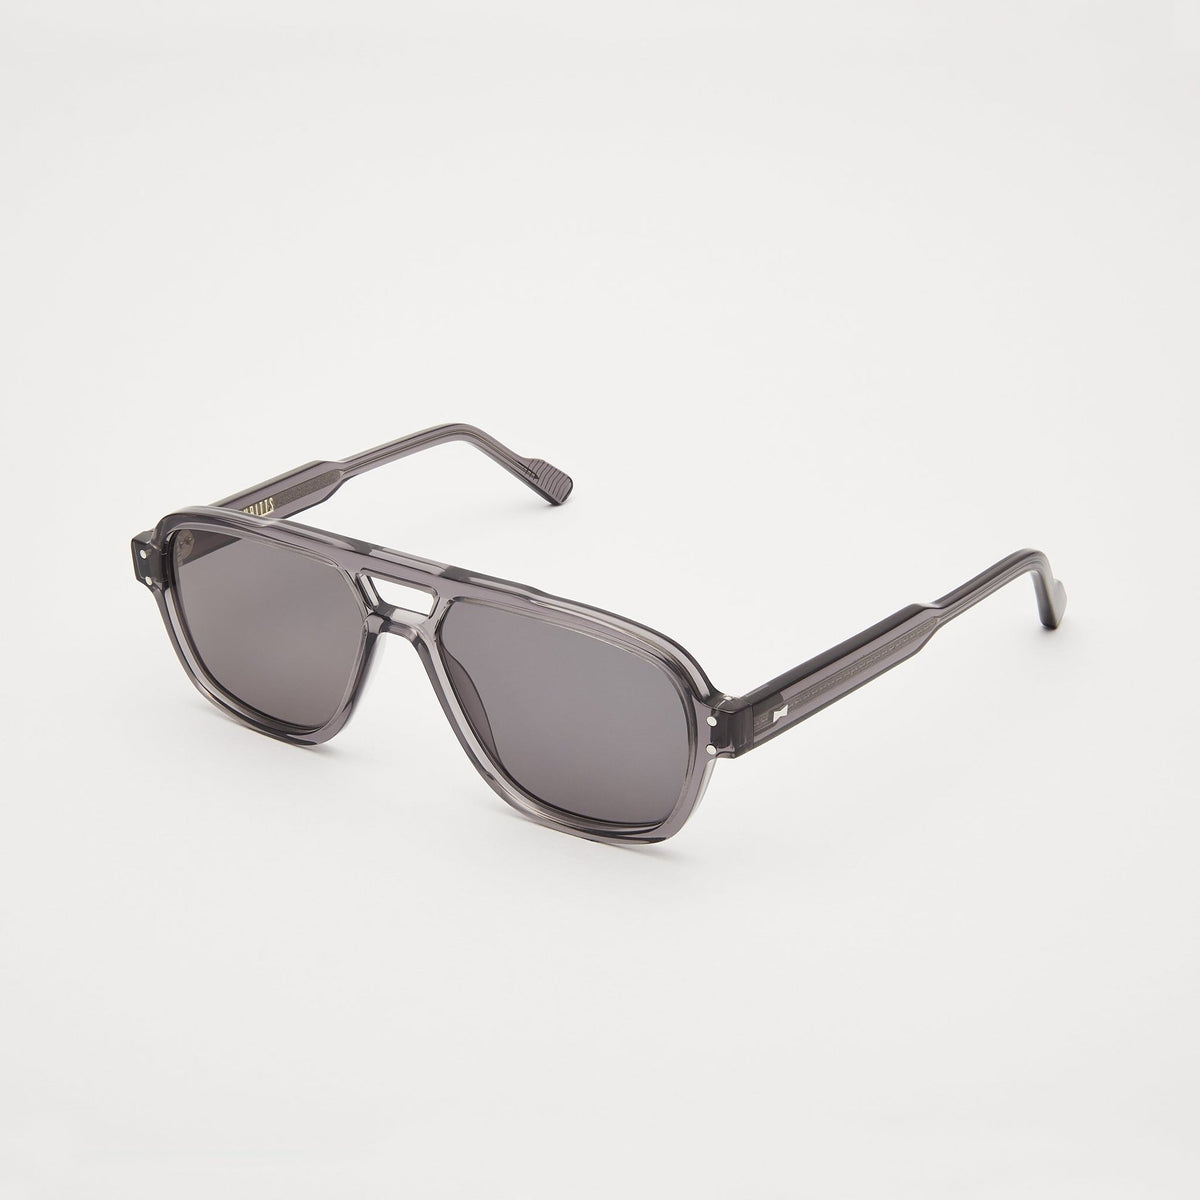 Smoke Grey Cubitts Earlsferry sunglasses